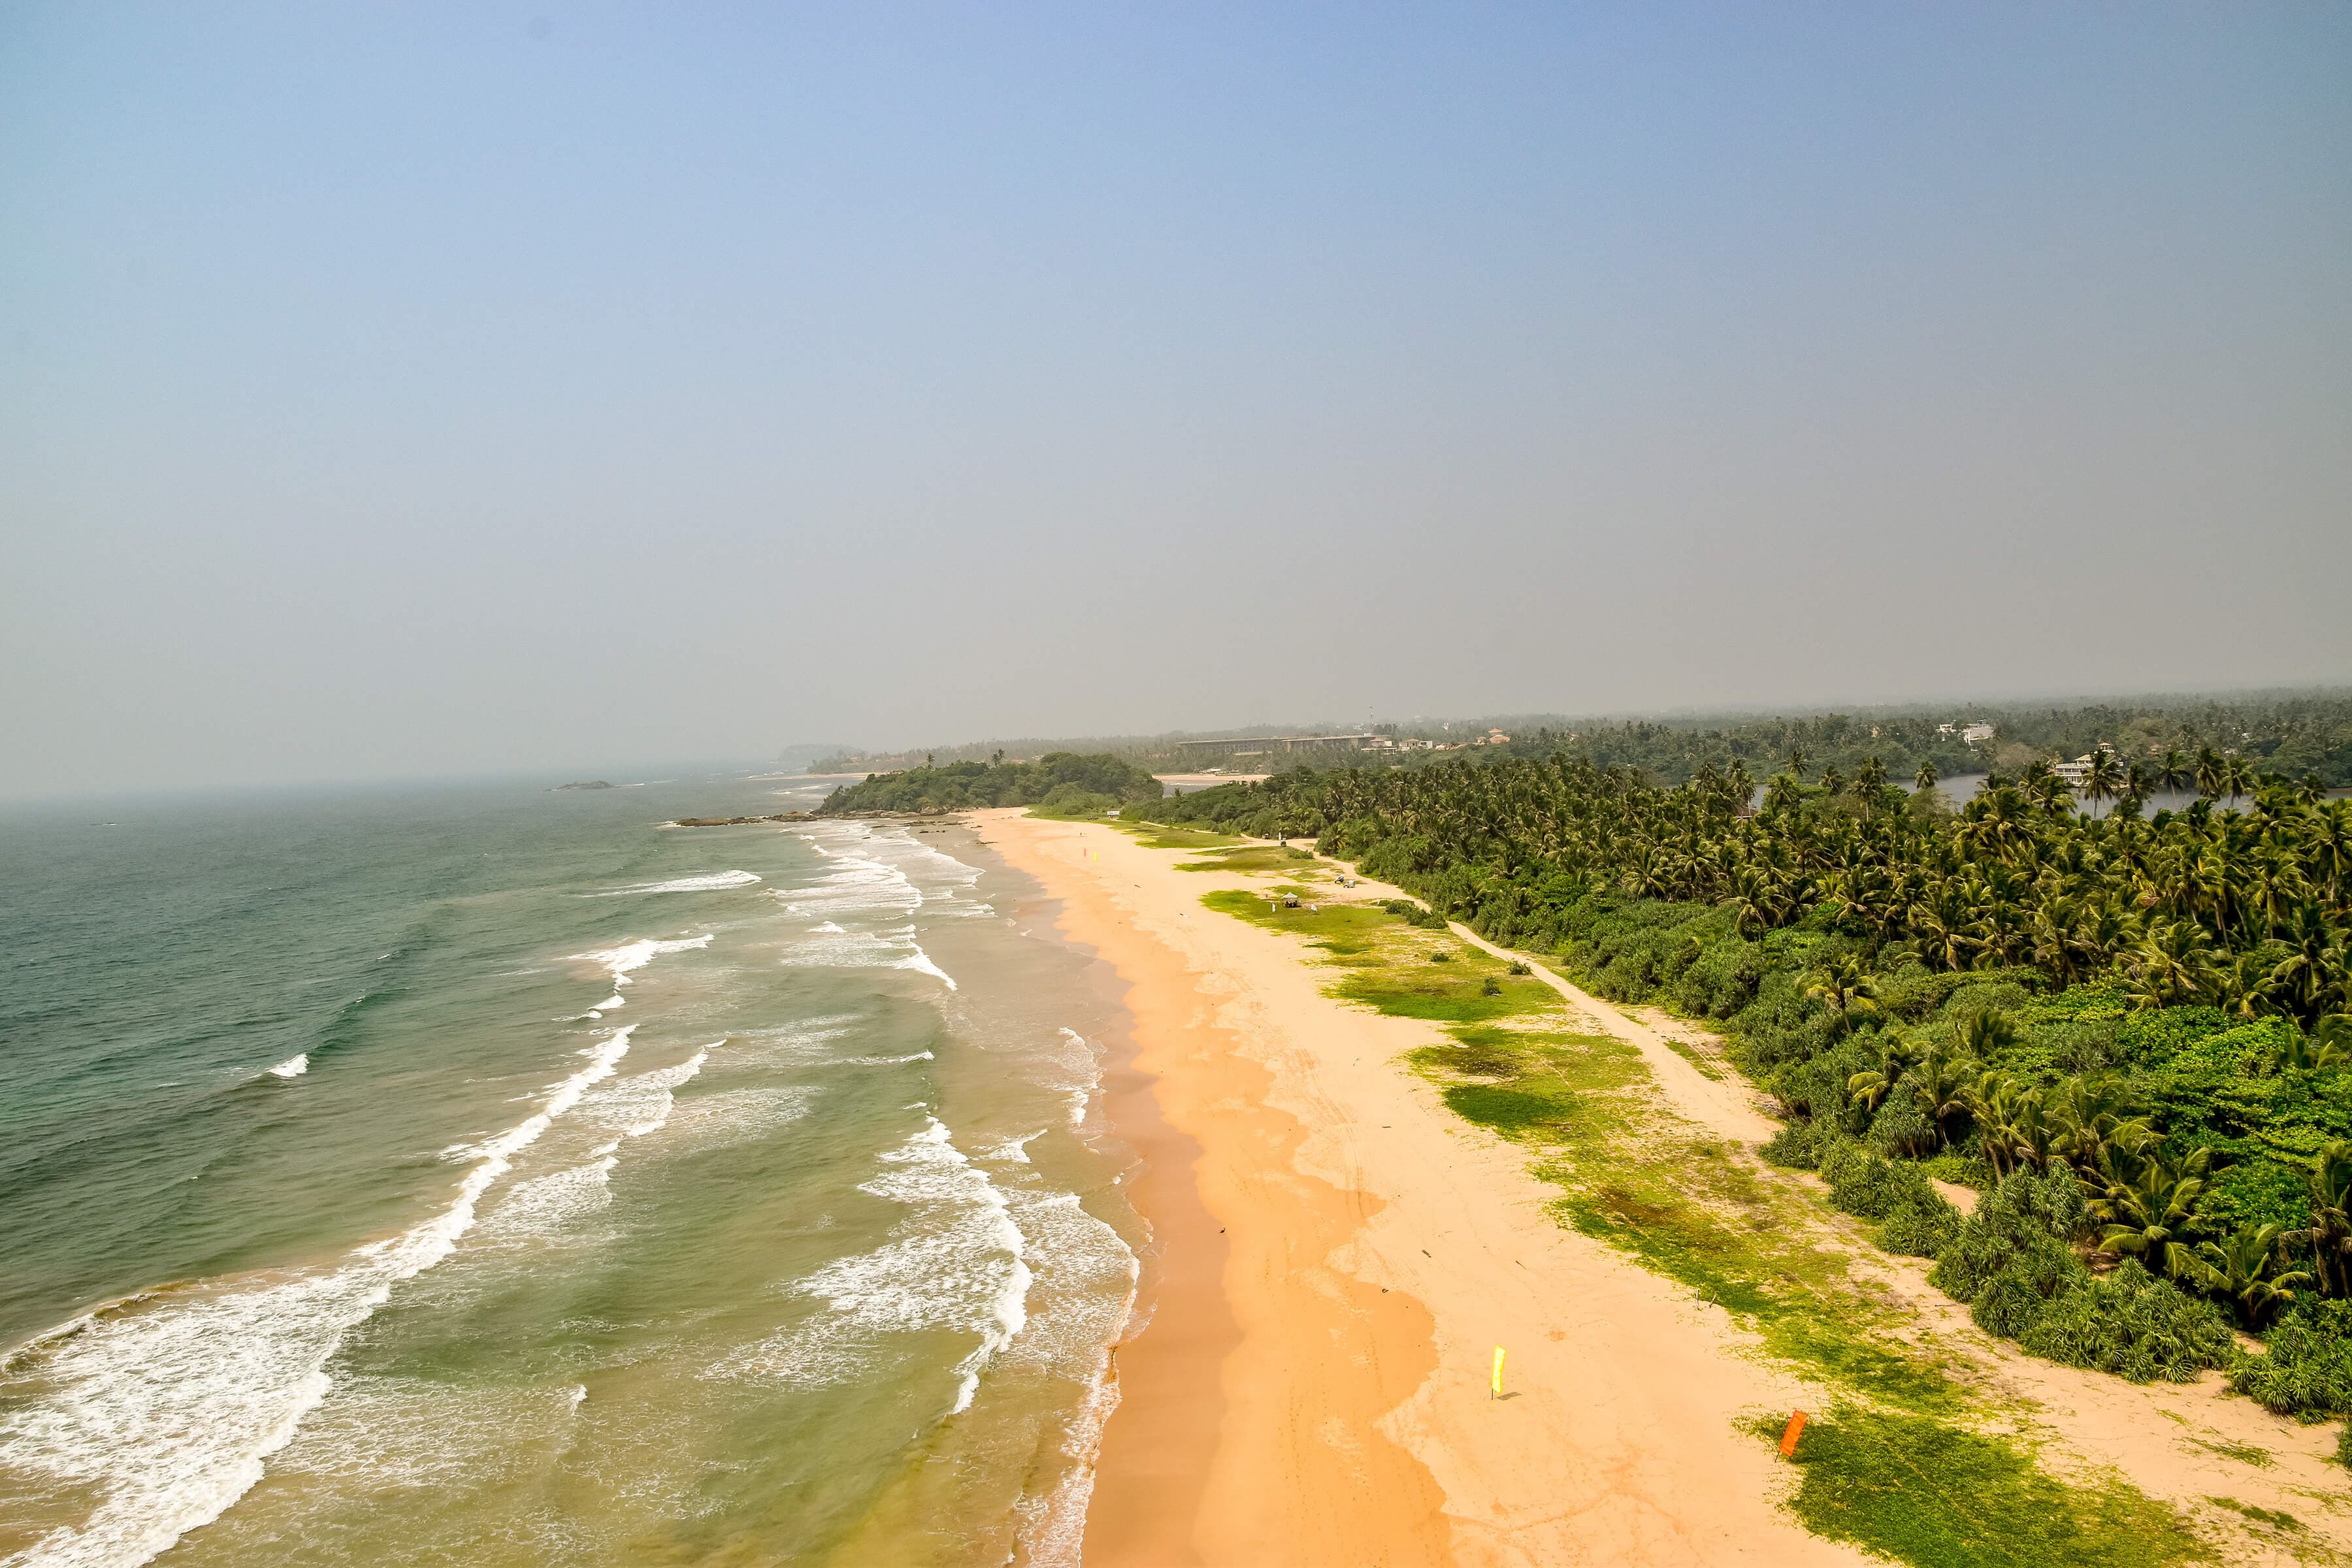 Arial view of the coral reef at Bentota beach, Sri Lanka.